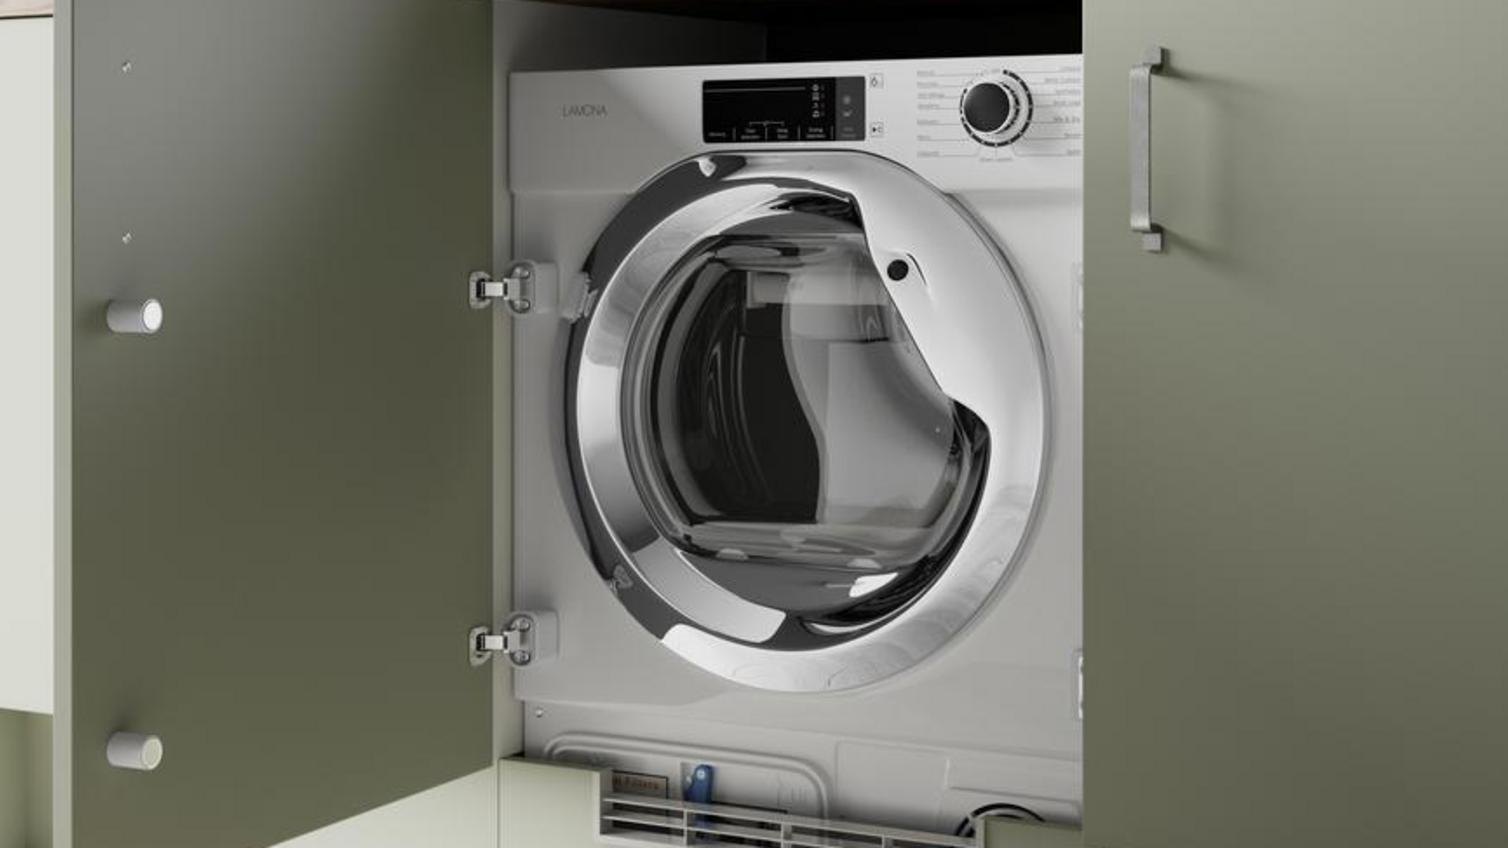 A Lamona washing machine integrated into a modern, green and timber kitchen.